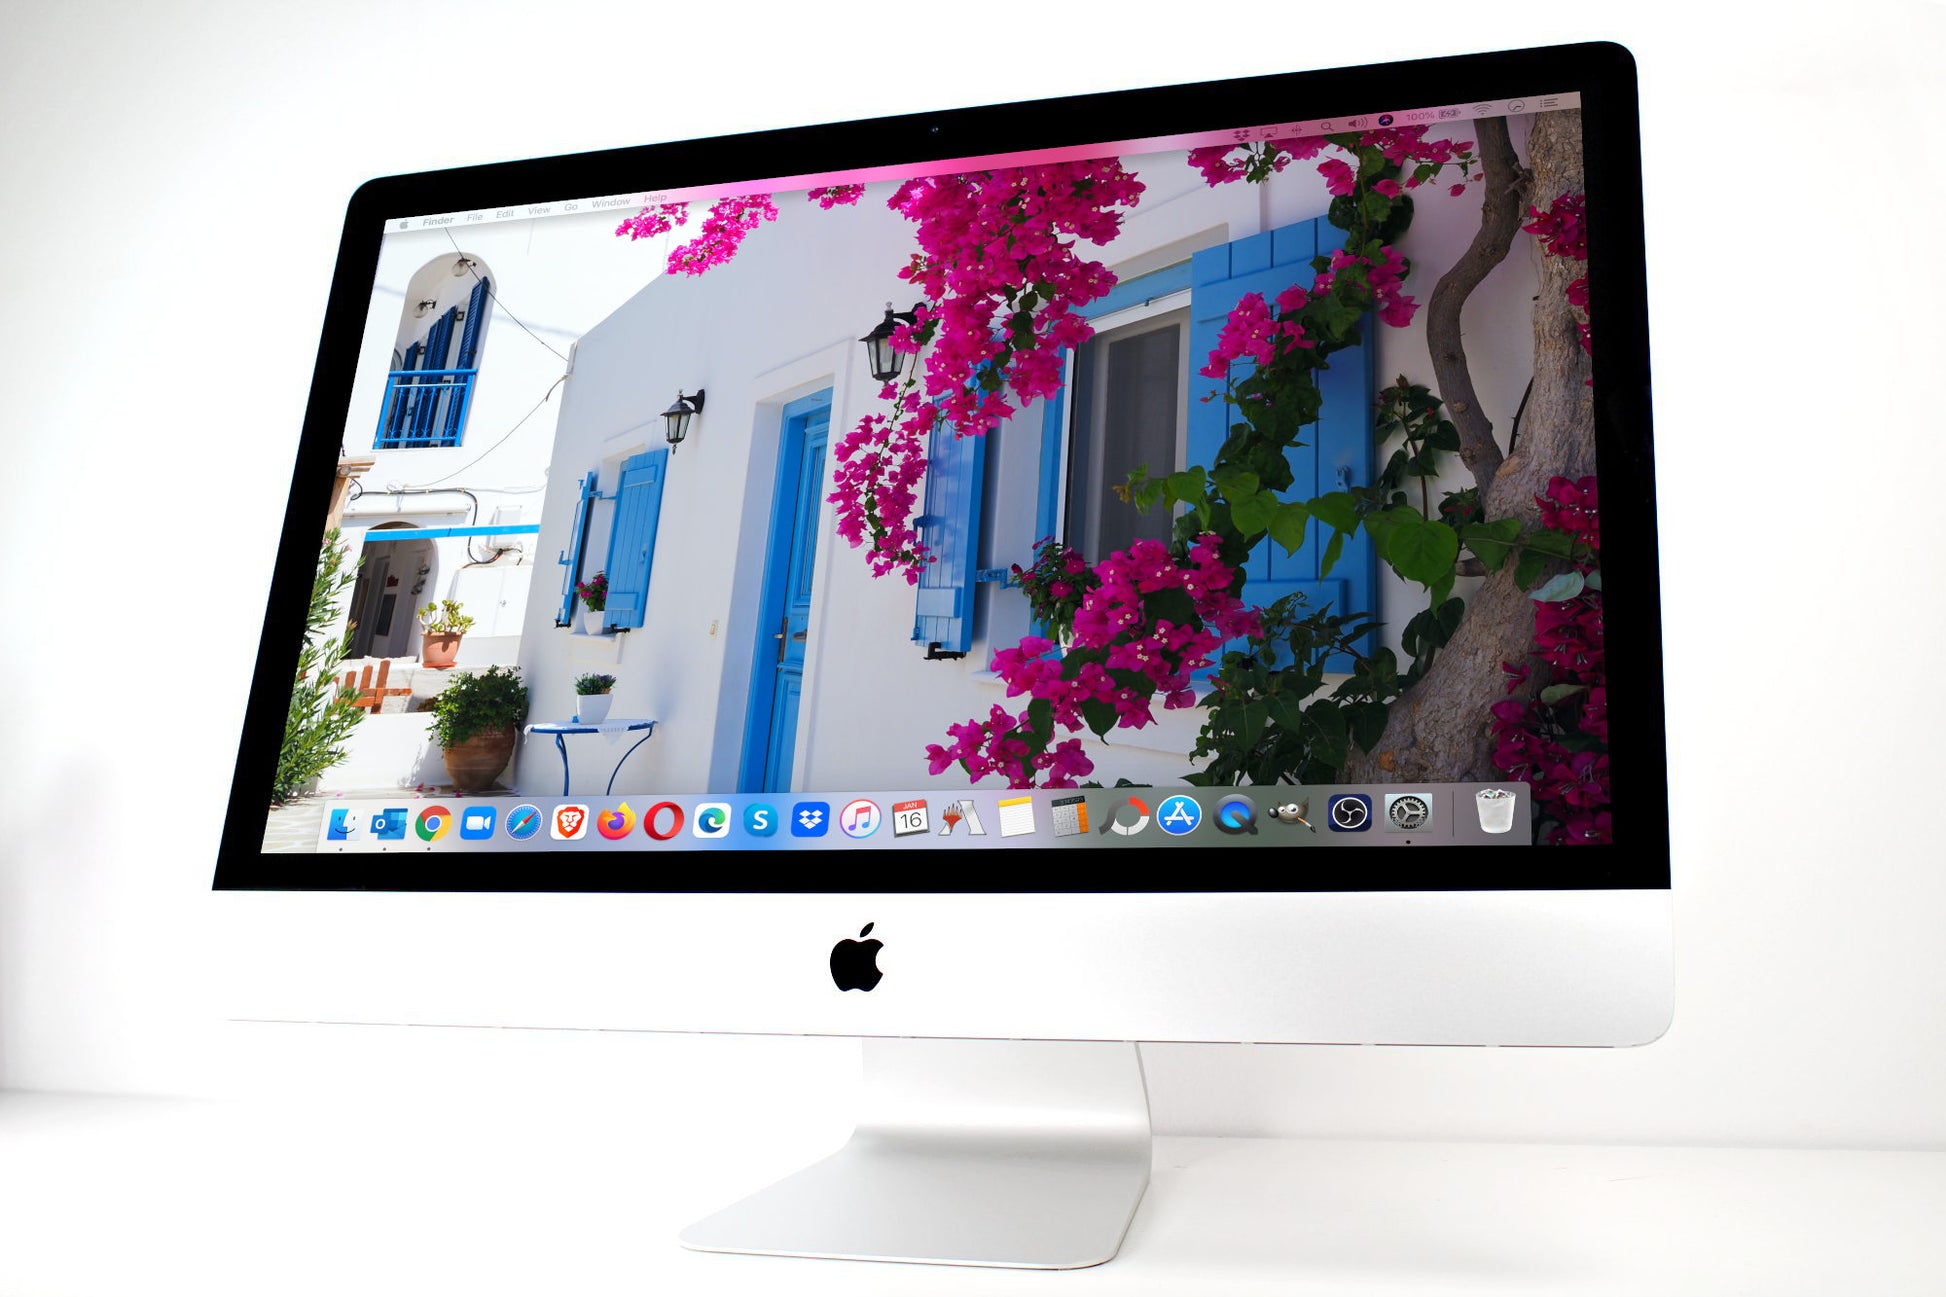 New Open Box 2020 iMac 3.1GHz i5 Up To 128GB RAM 256GB SSD